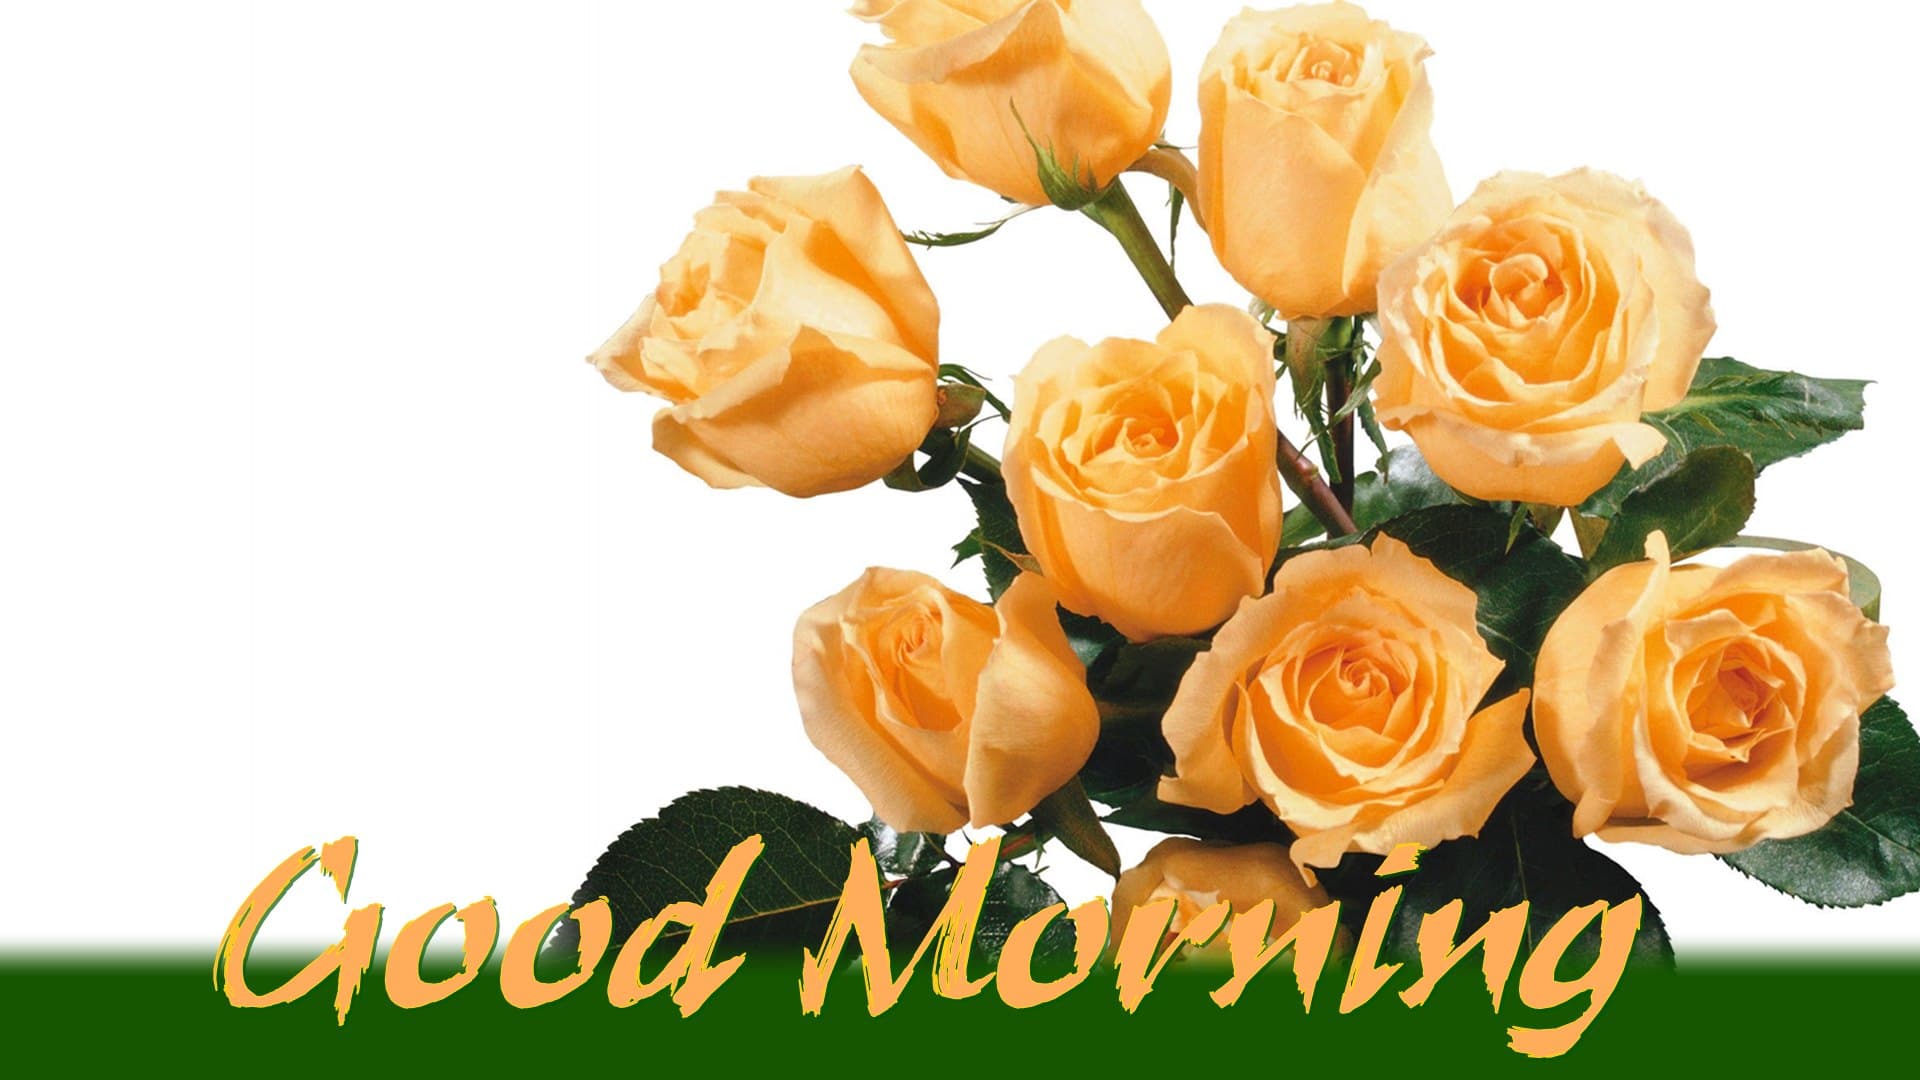 Good Morning Rose Flower Wish Friends Pics Mojly Image Good Morning